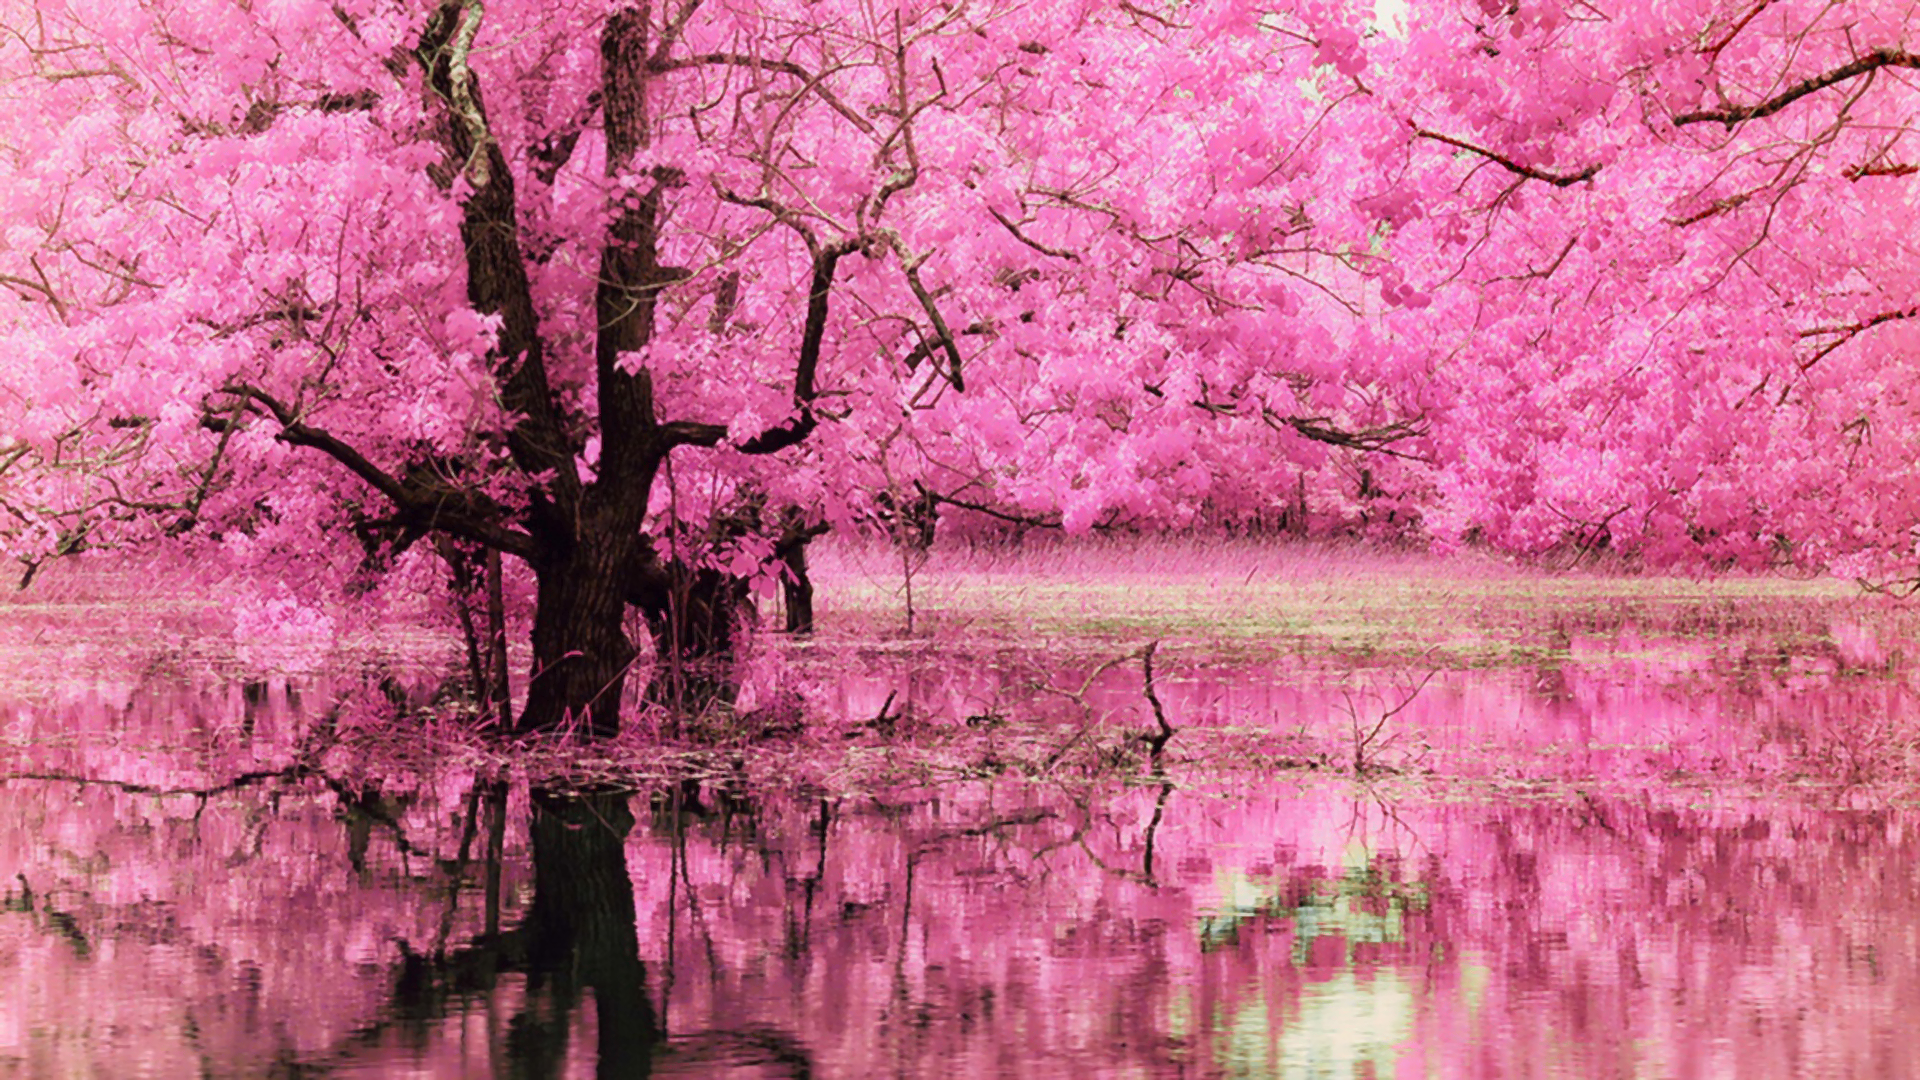 pink nature wallpaper,pink,nature,tree,reflection,natural landscape